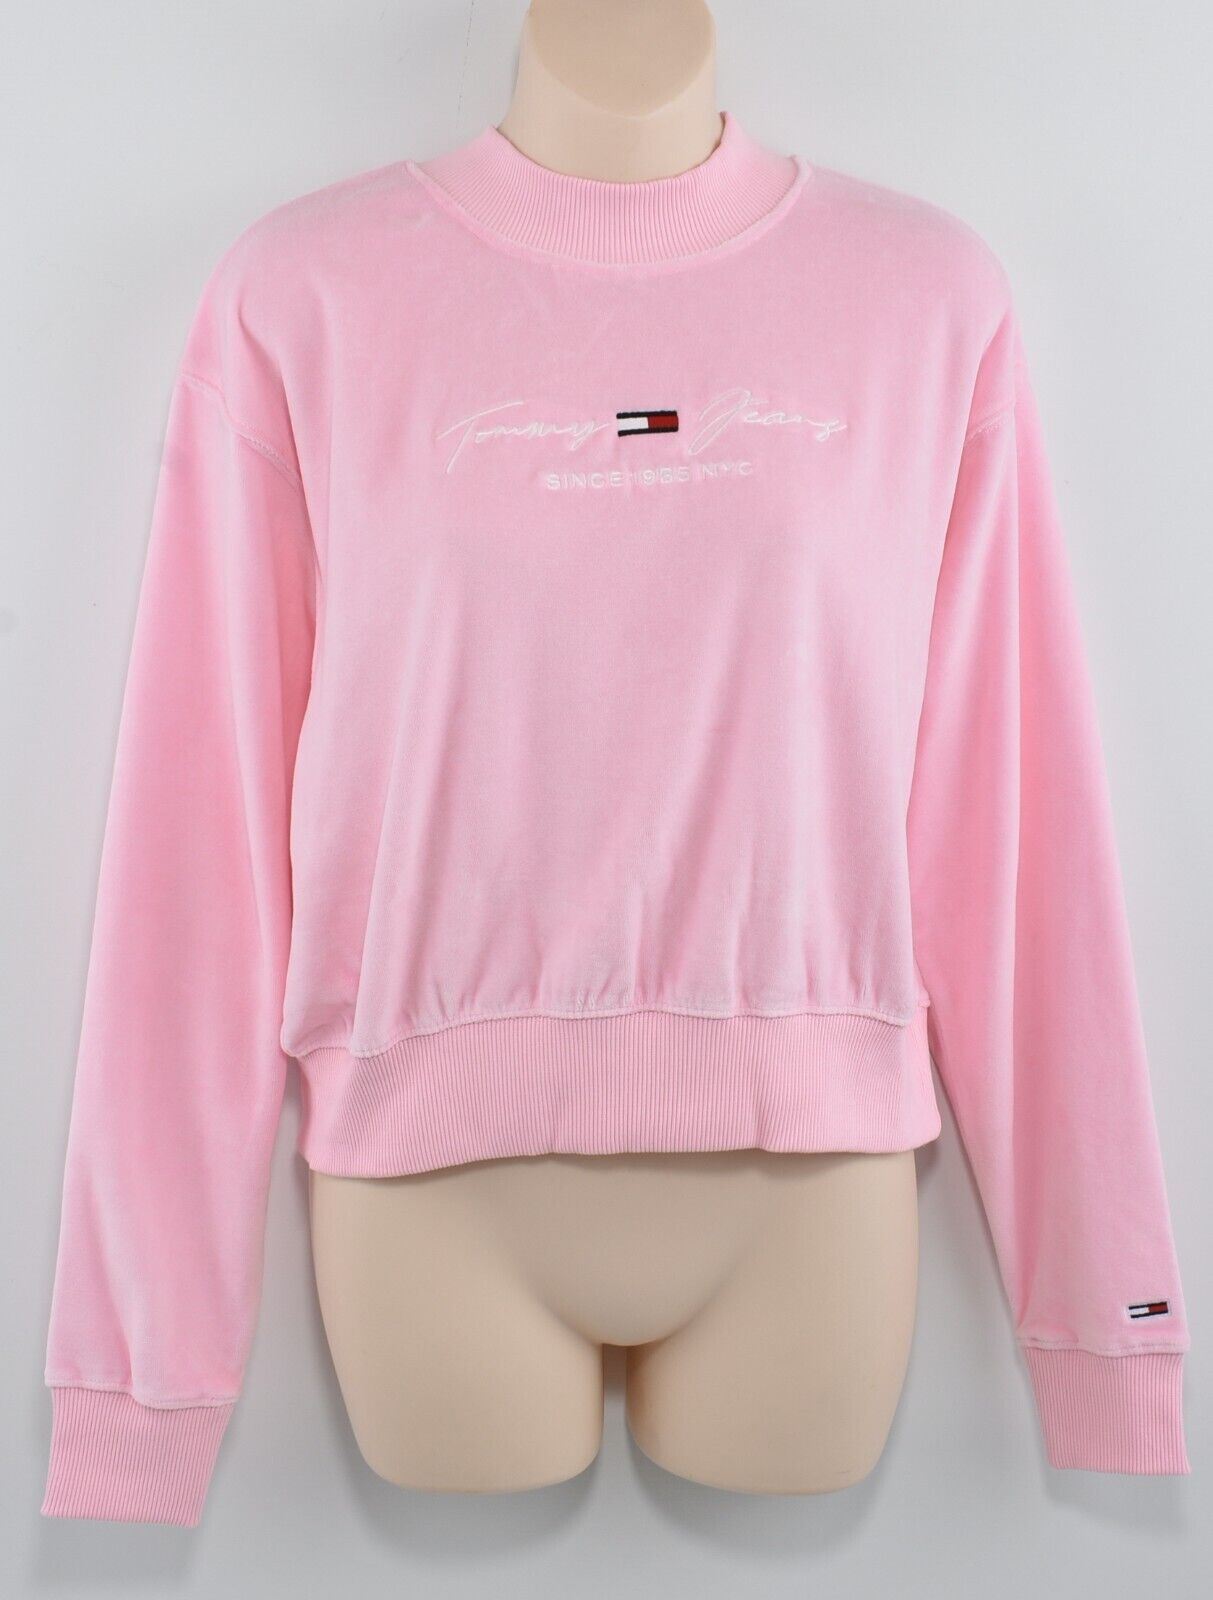 TOMMY JEANS by TOMMY HILFIGER Women's Cropped Velour Sweatshirt, Pink, size L